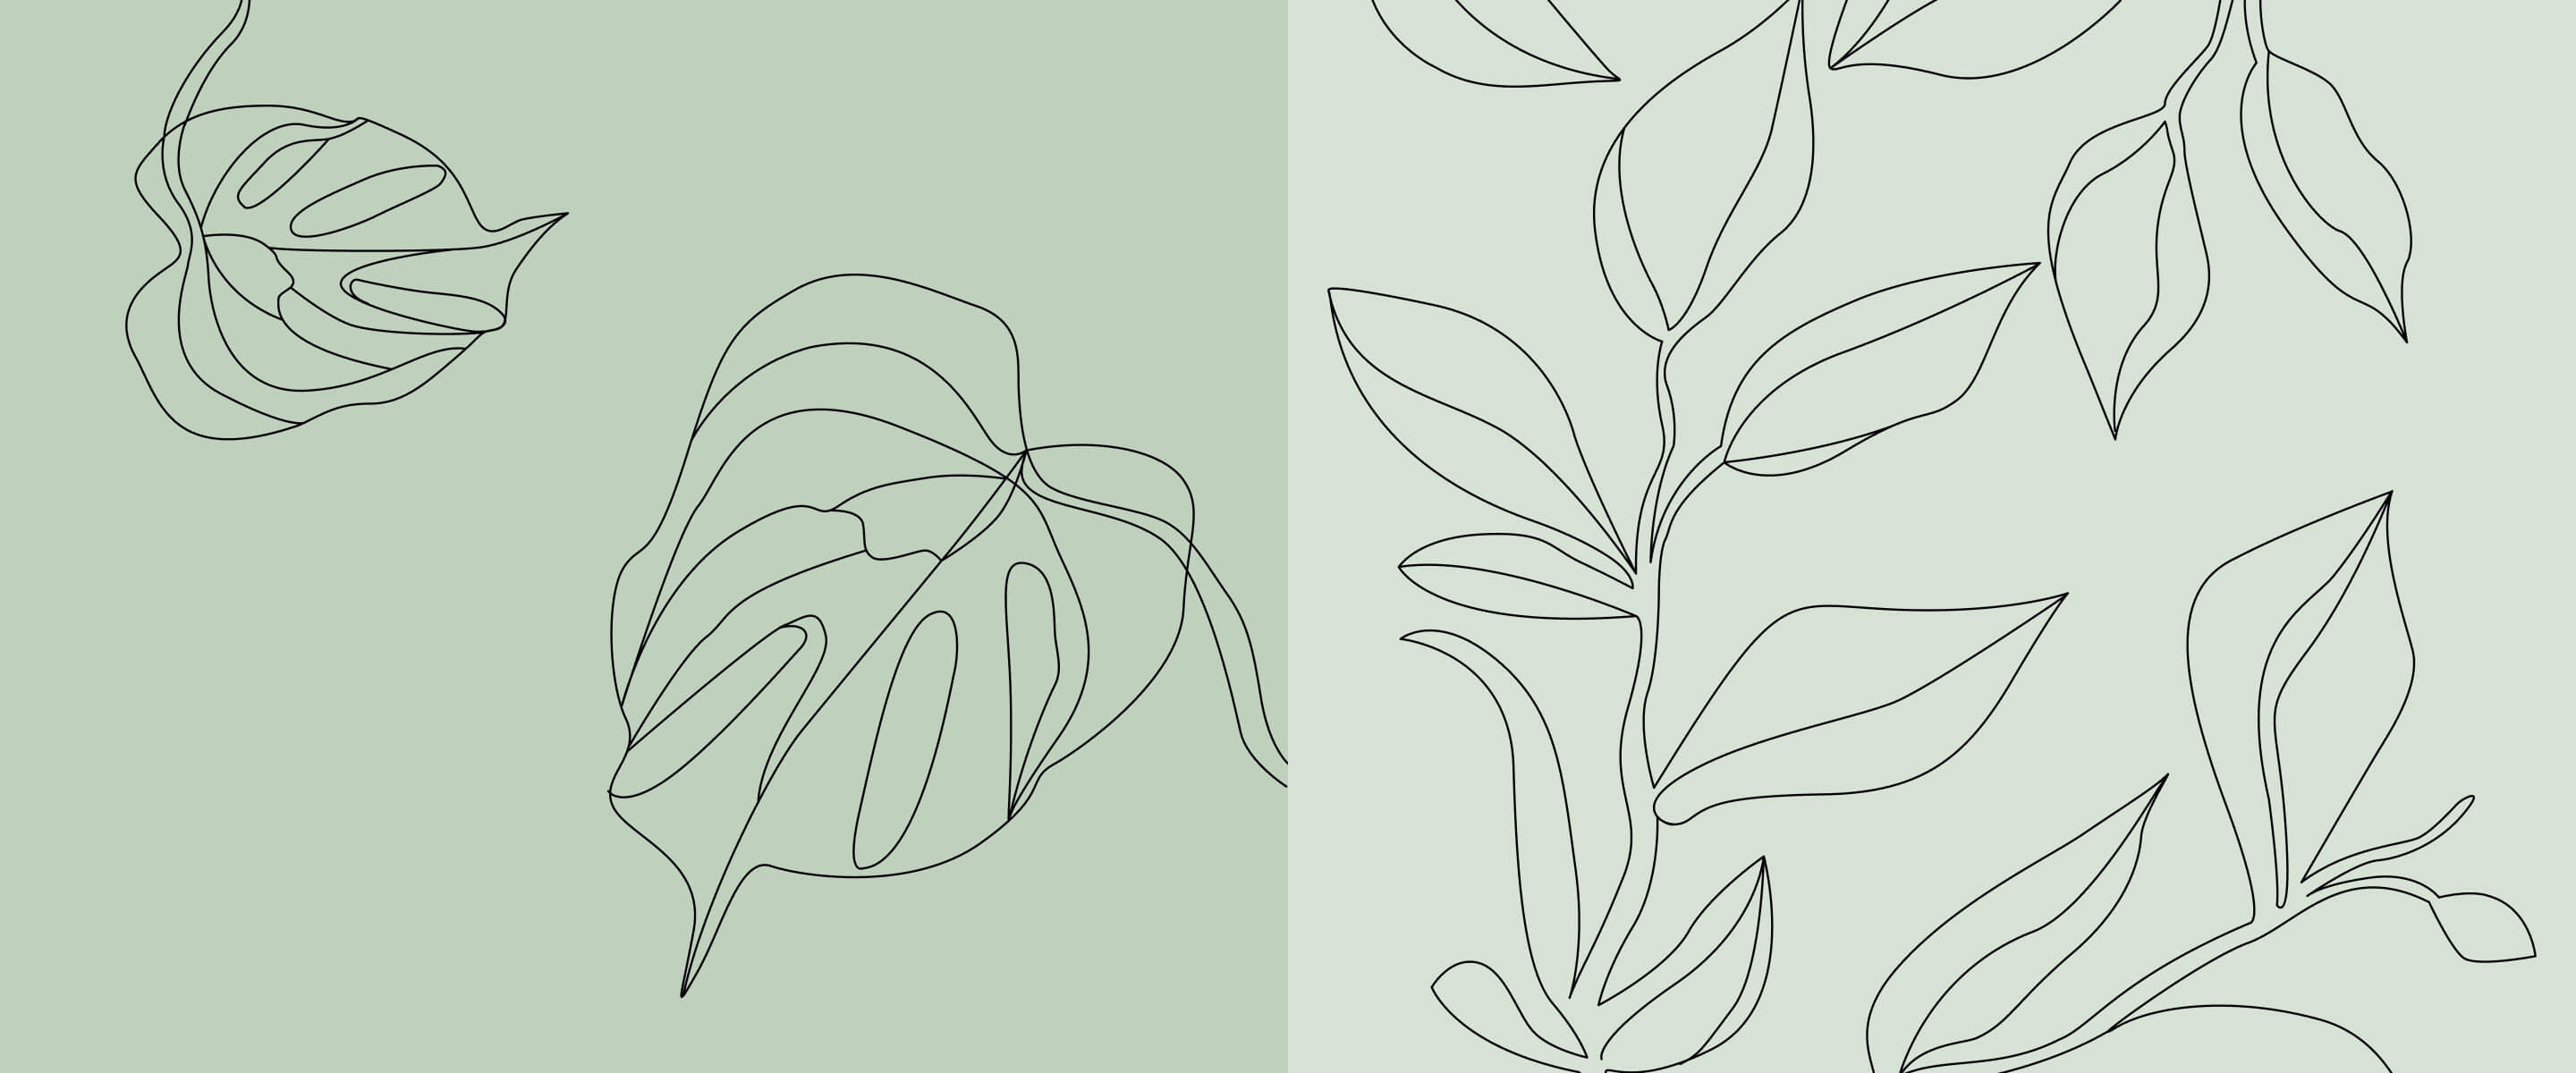 Plants scribble